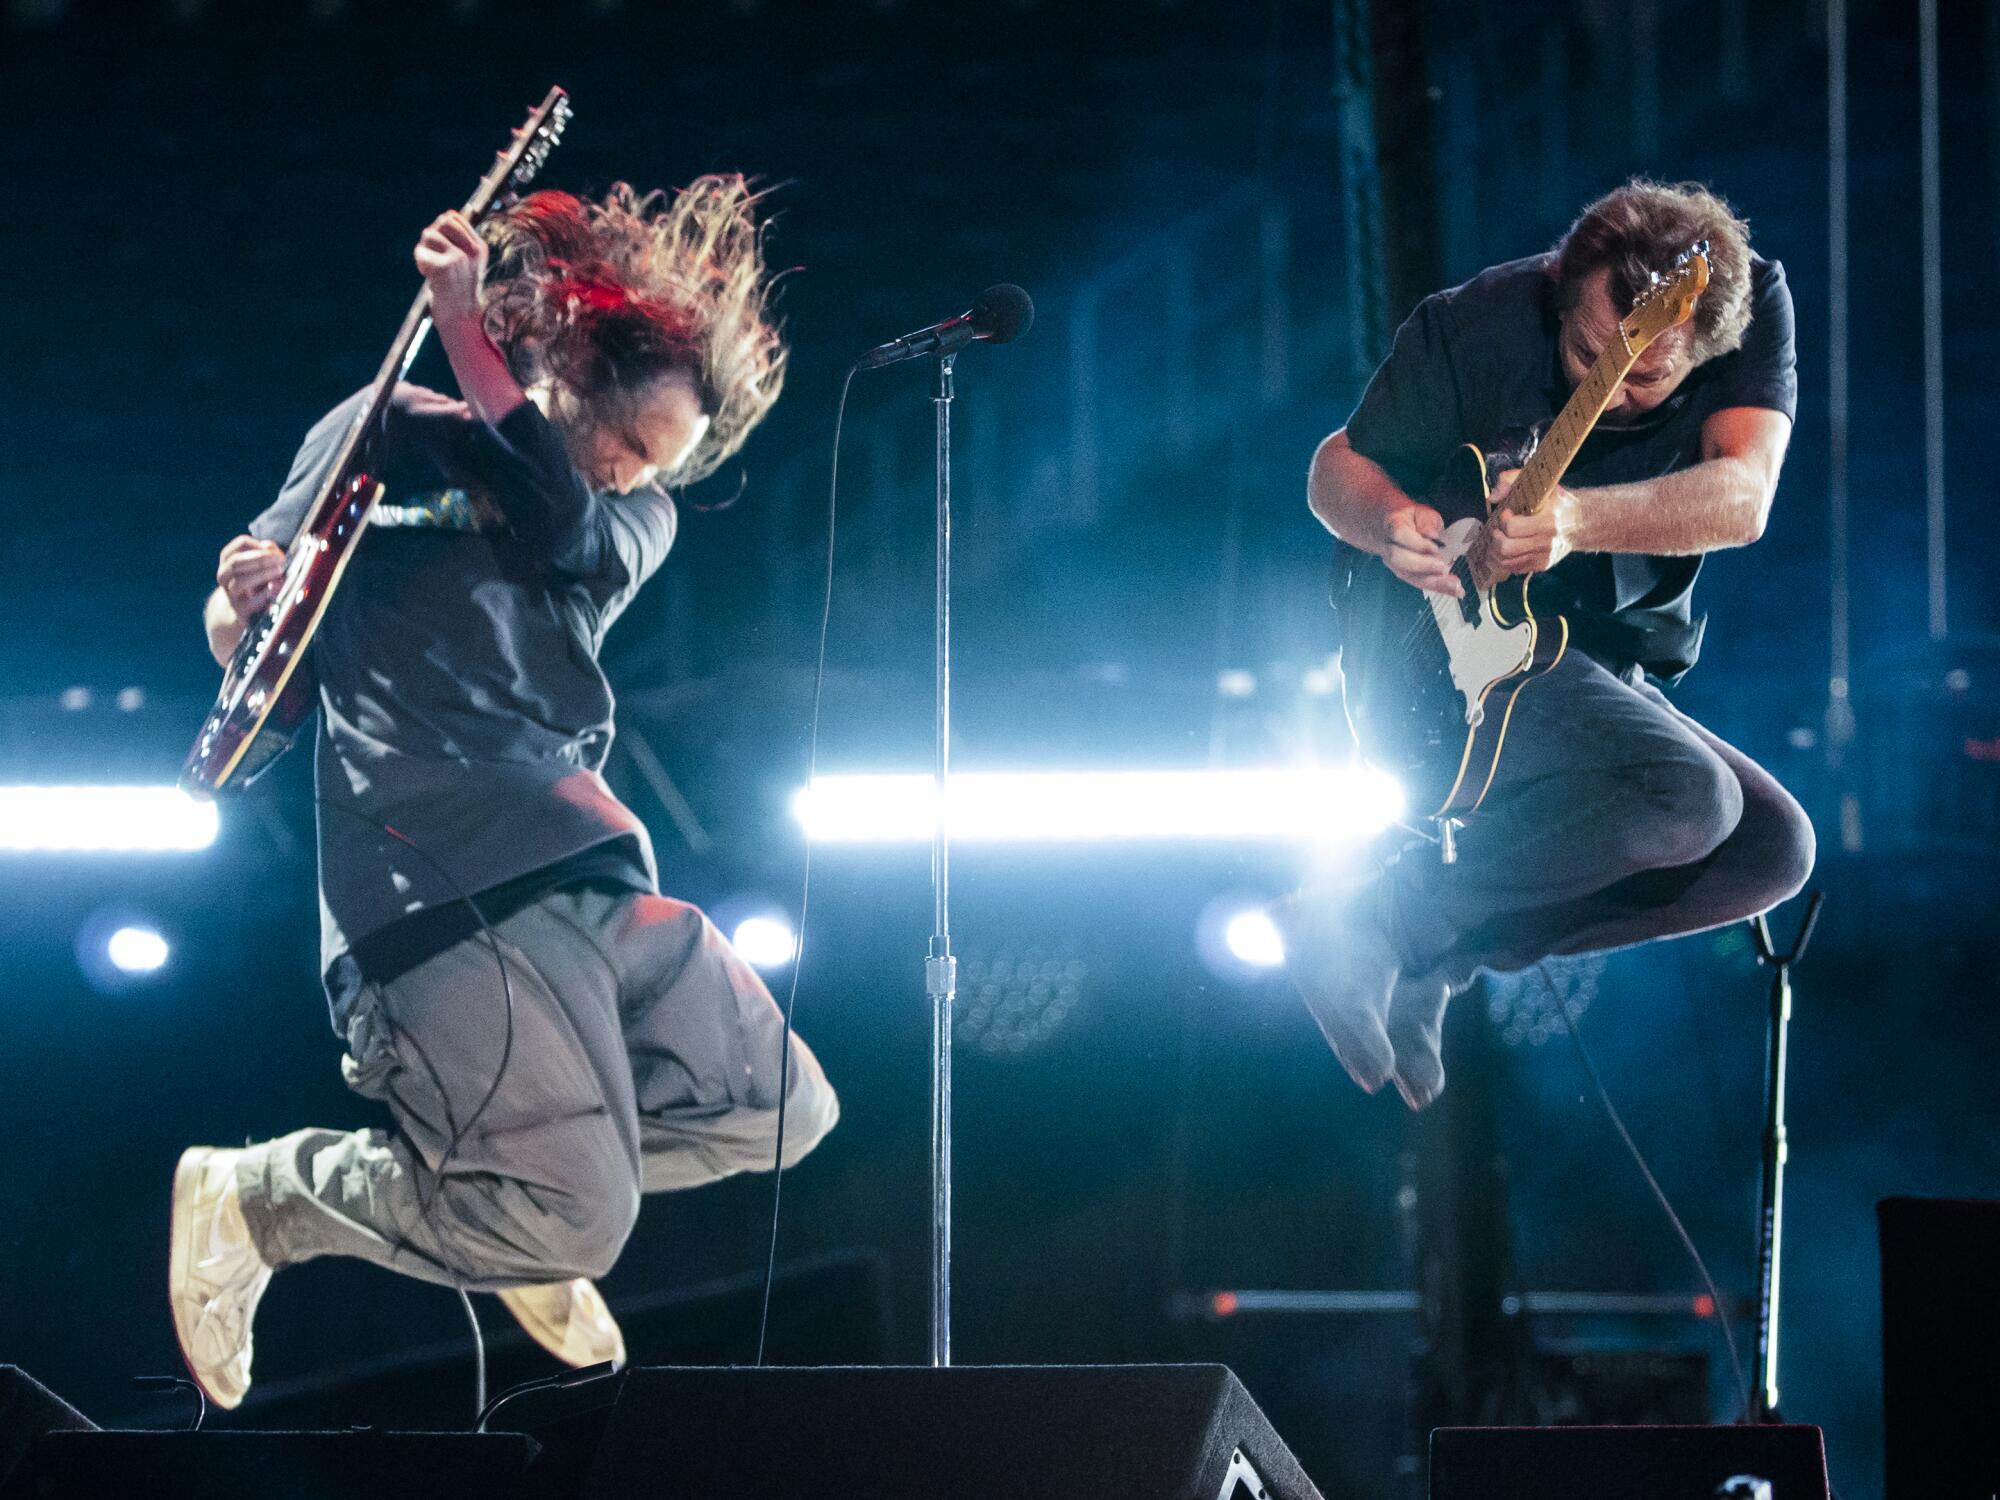 Josh Klinghoffer and Eddie Vedder jump at the Vax Live concert